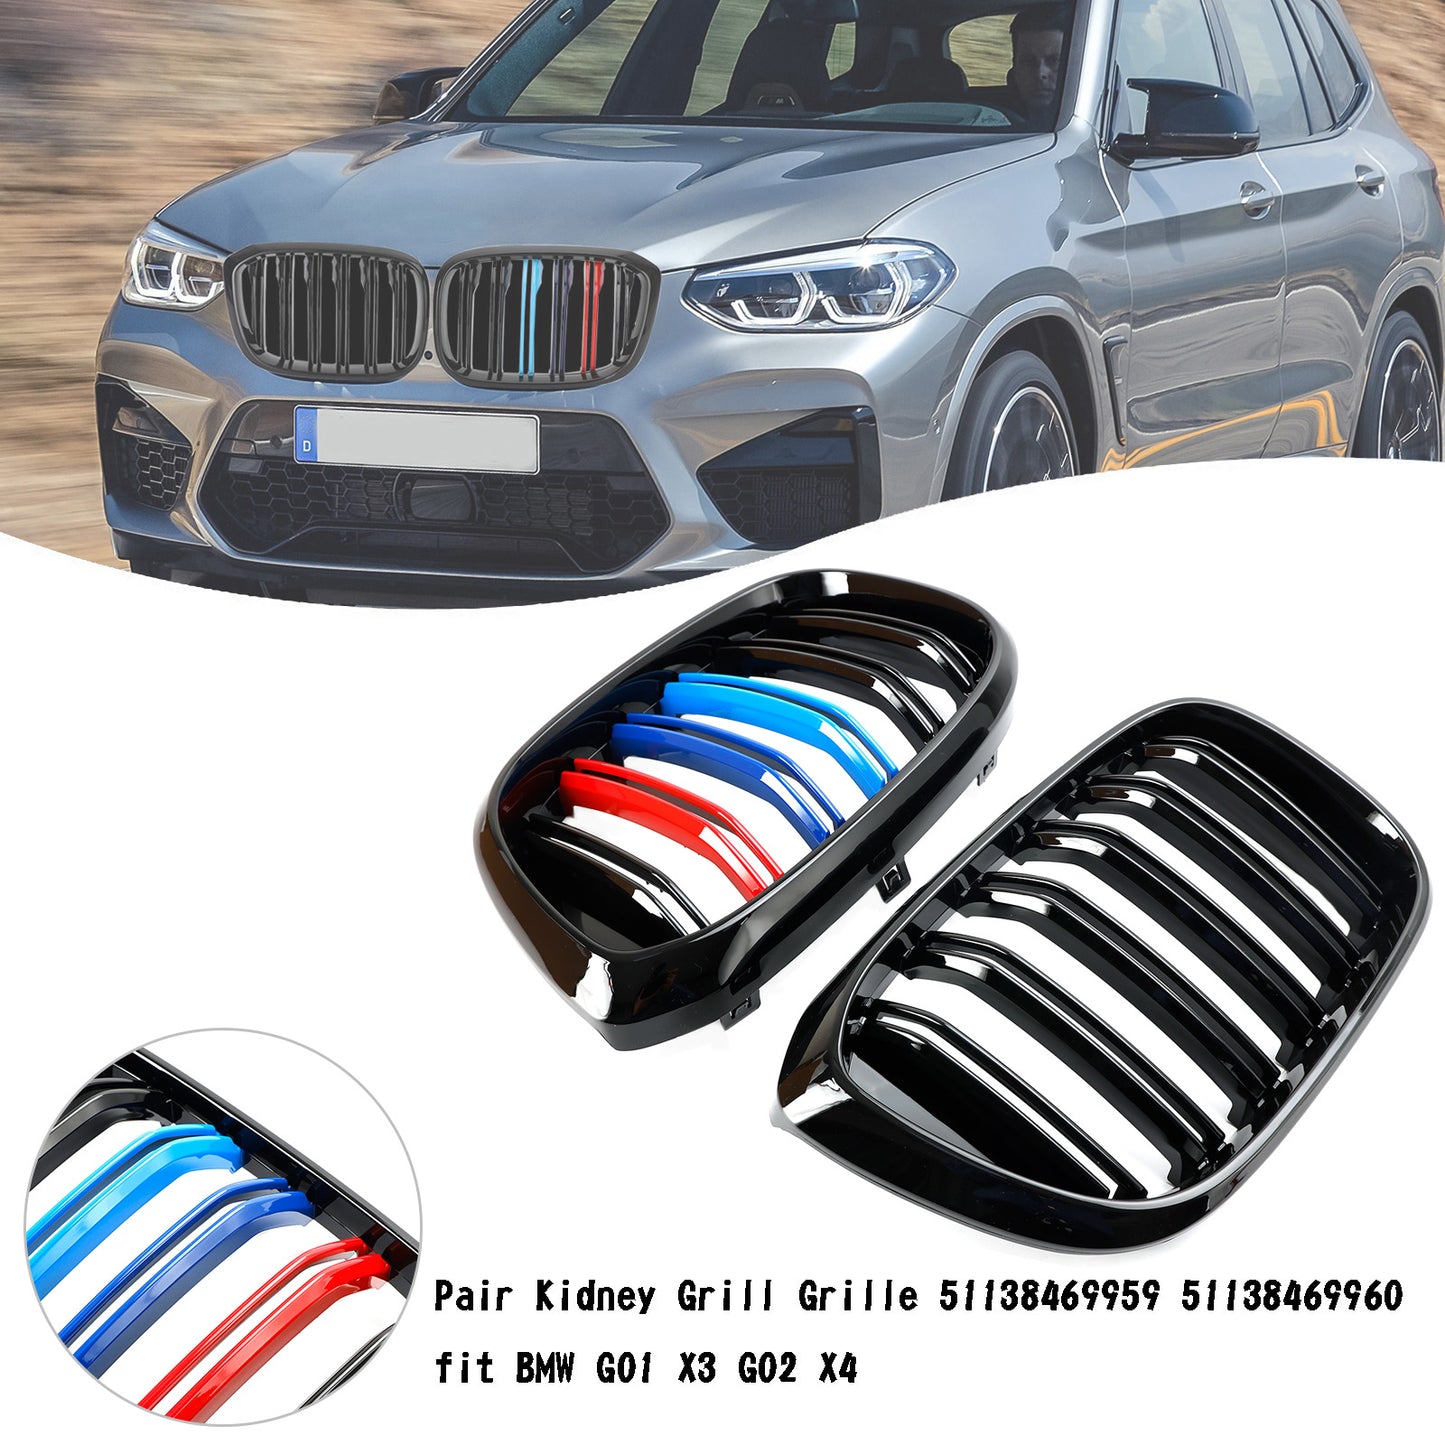 2pcs M-Color Nierengrill Kühlergrill 51138469959 Fit BMW G01 X3 G02 X4 GLOTS Schwarz Generikum